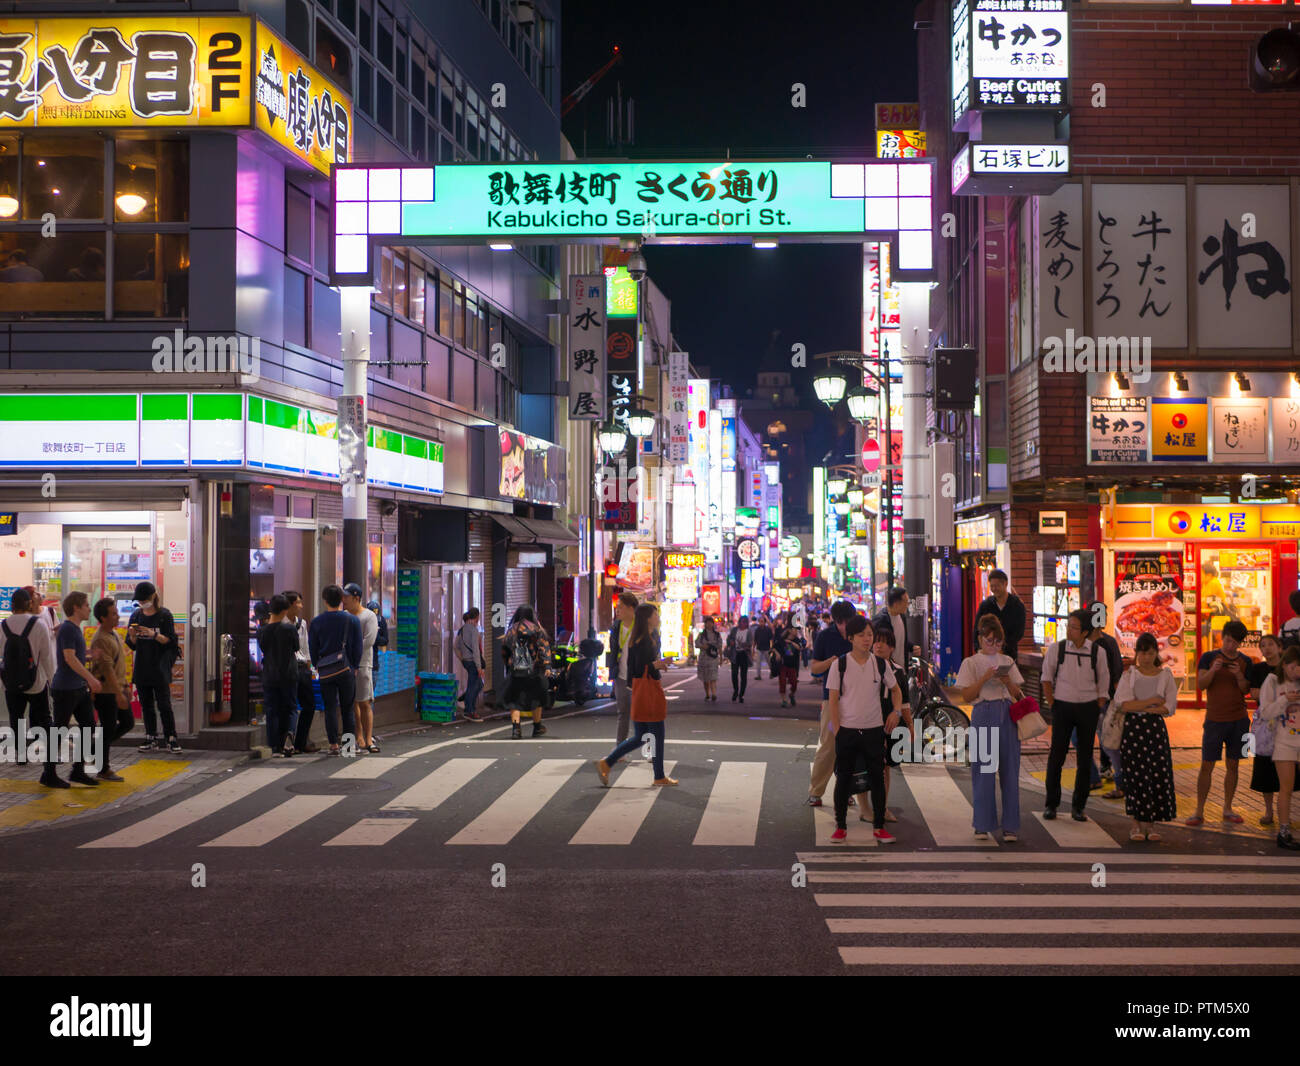 Street Scene Japan Kabukicho Shinjuku Tokyo Hi Res Stock Photography And Images Page 3 Alamy